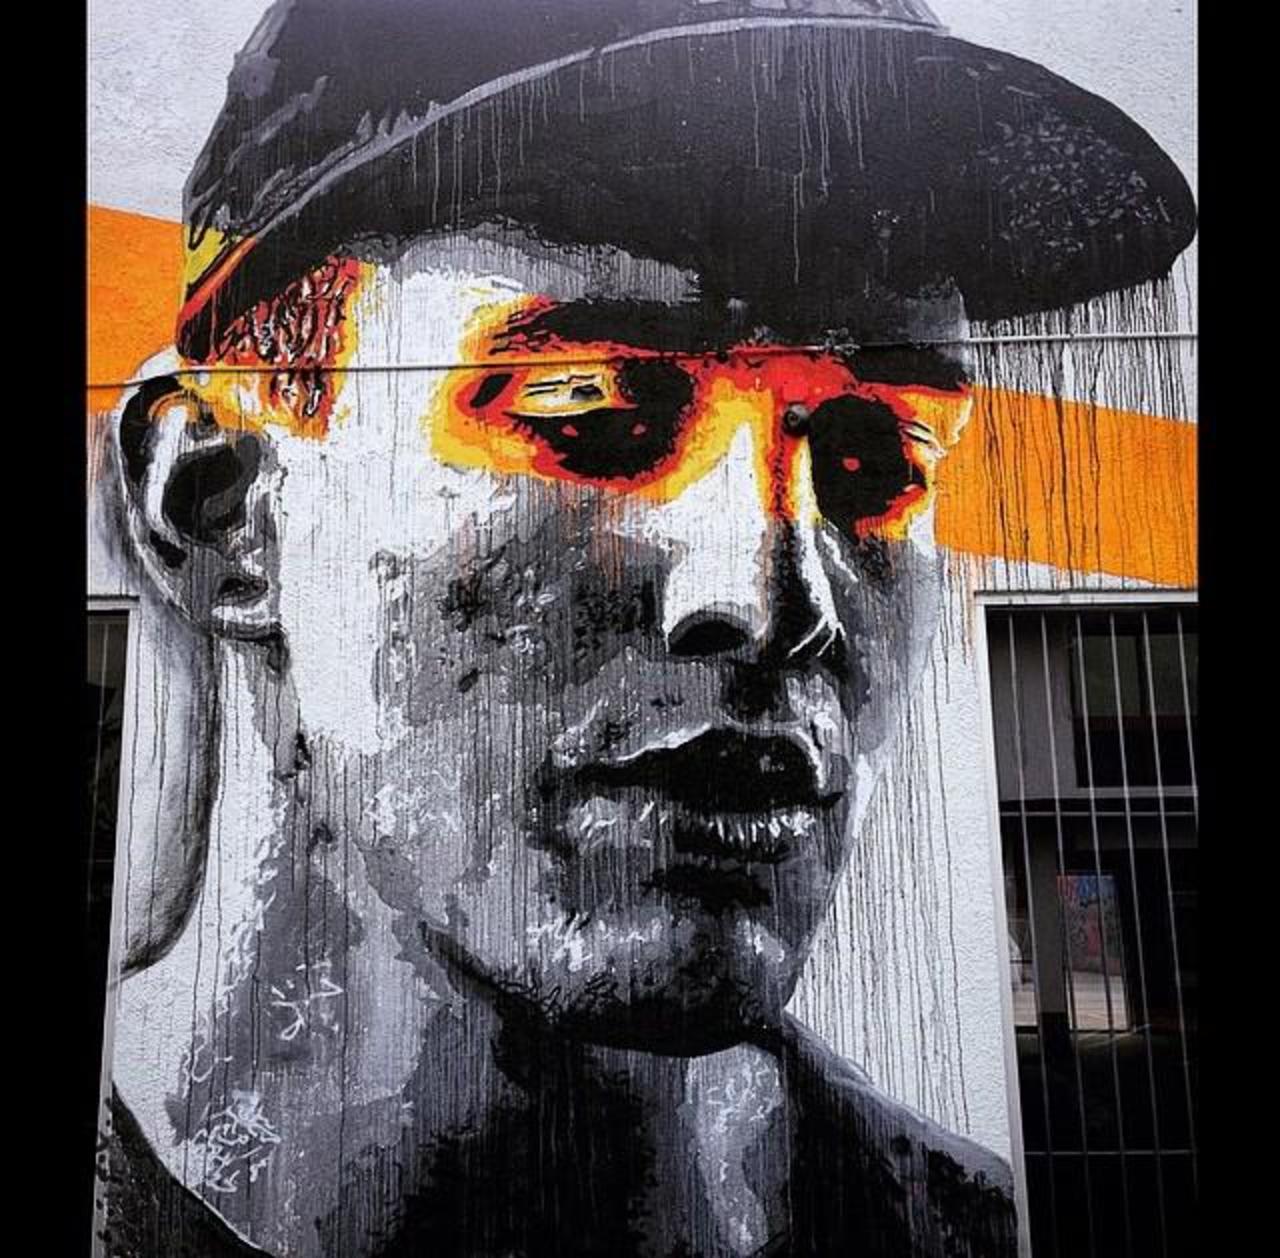 Artist Nils Westergard Street Art portrait in Miami 

#art #graffiti #mural #streetart http://t.co/FNQu6MIqCG